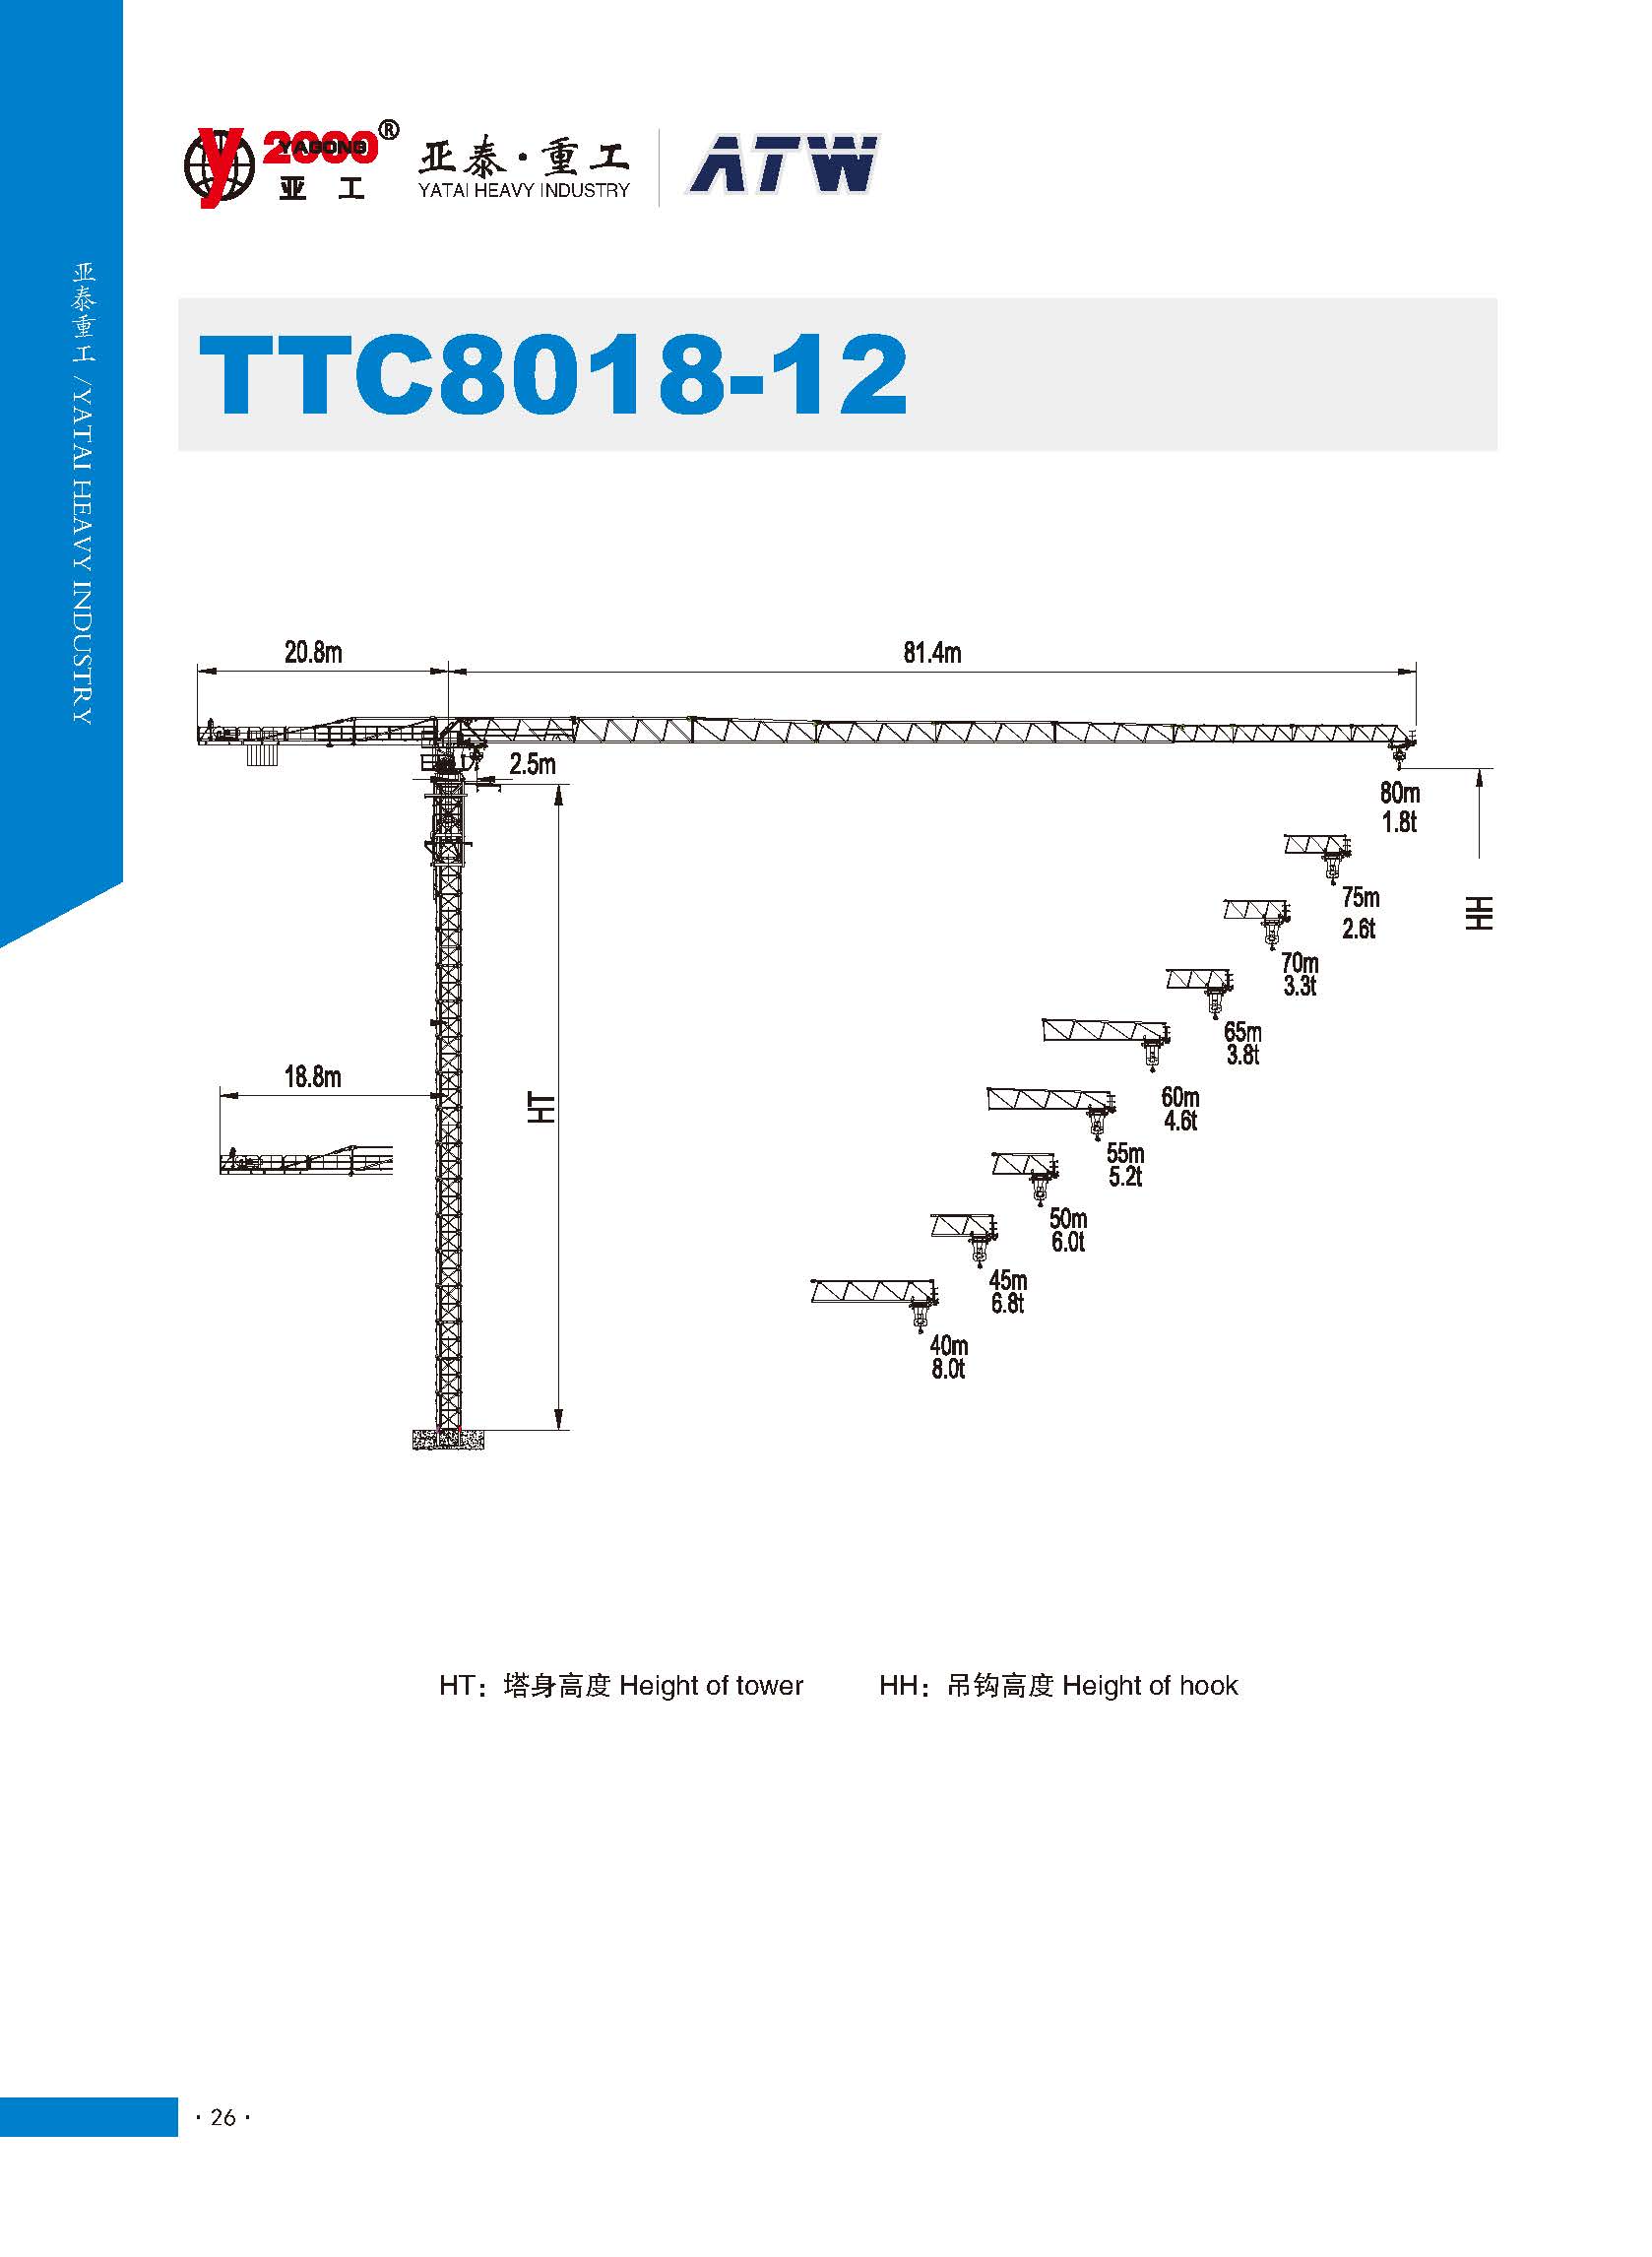 Topless Tower Crane TTC8018-12